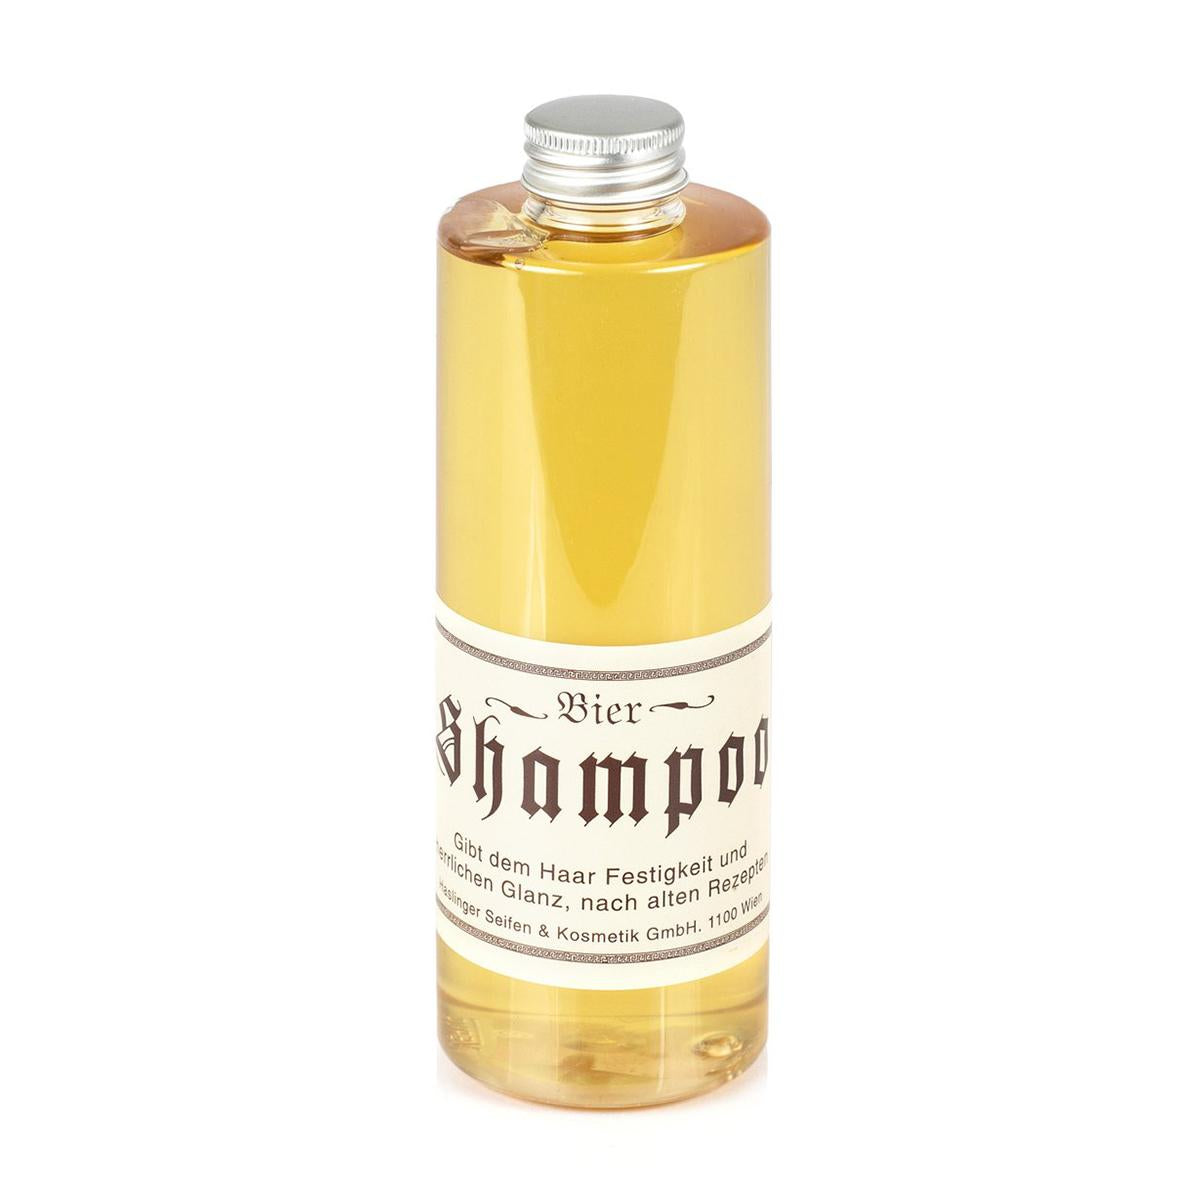 Primary image of Bier Shampoo